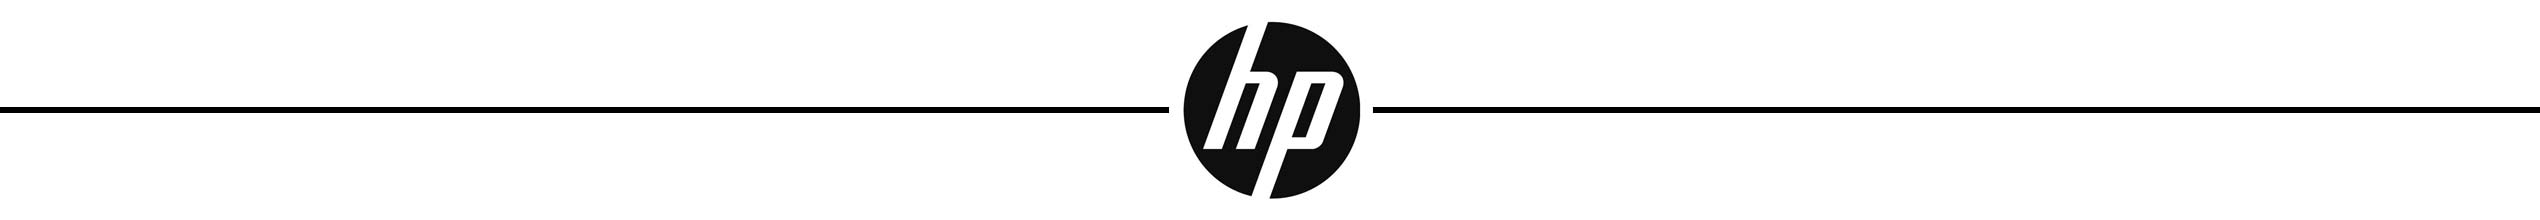 HP Desktop Computers and Laptops | Heartland America